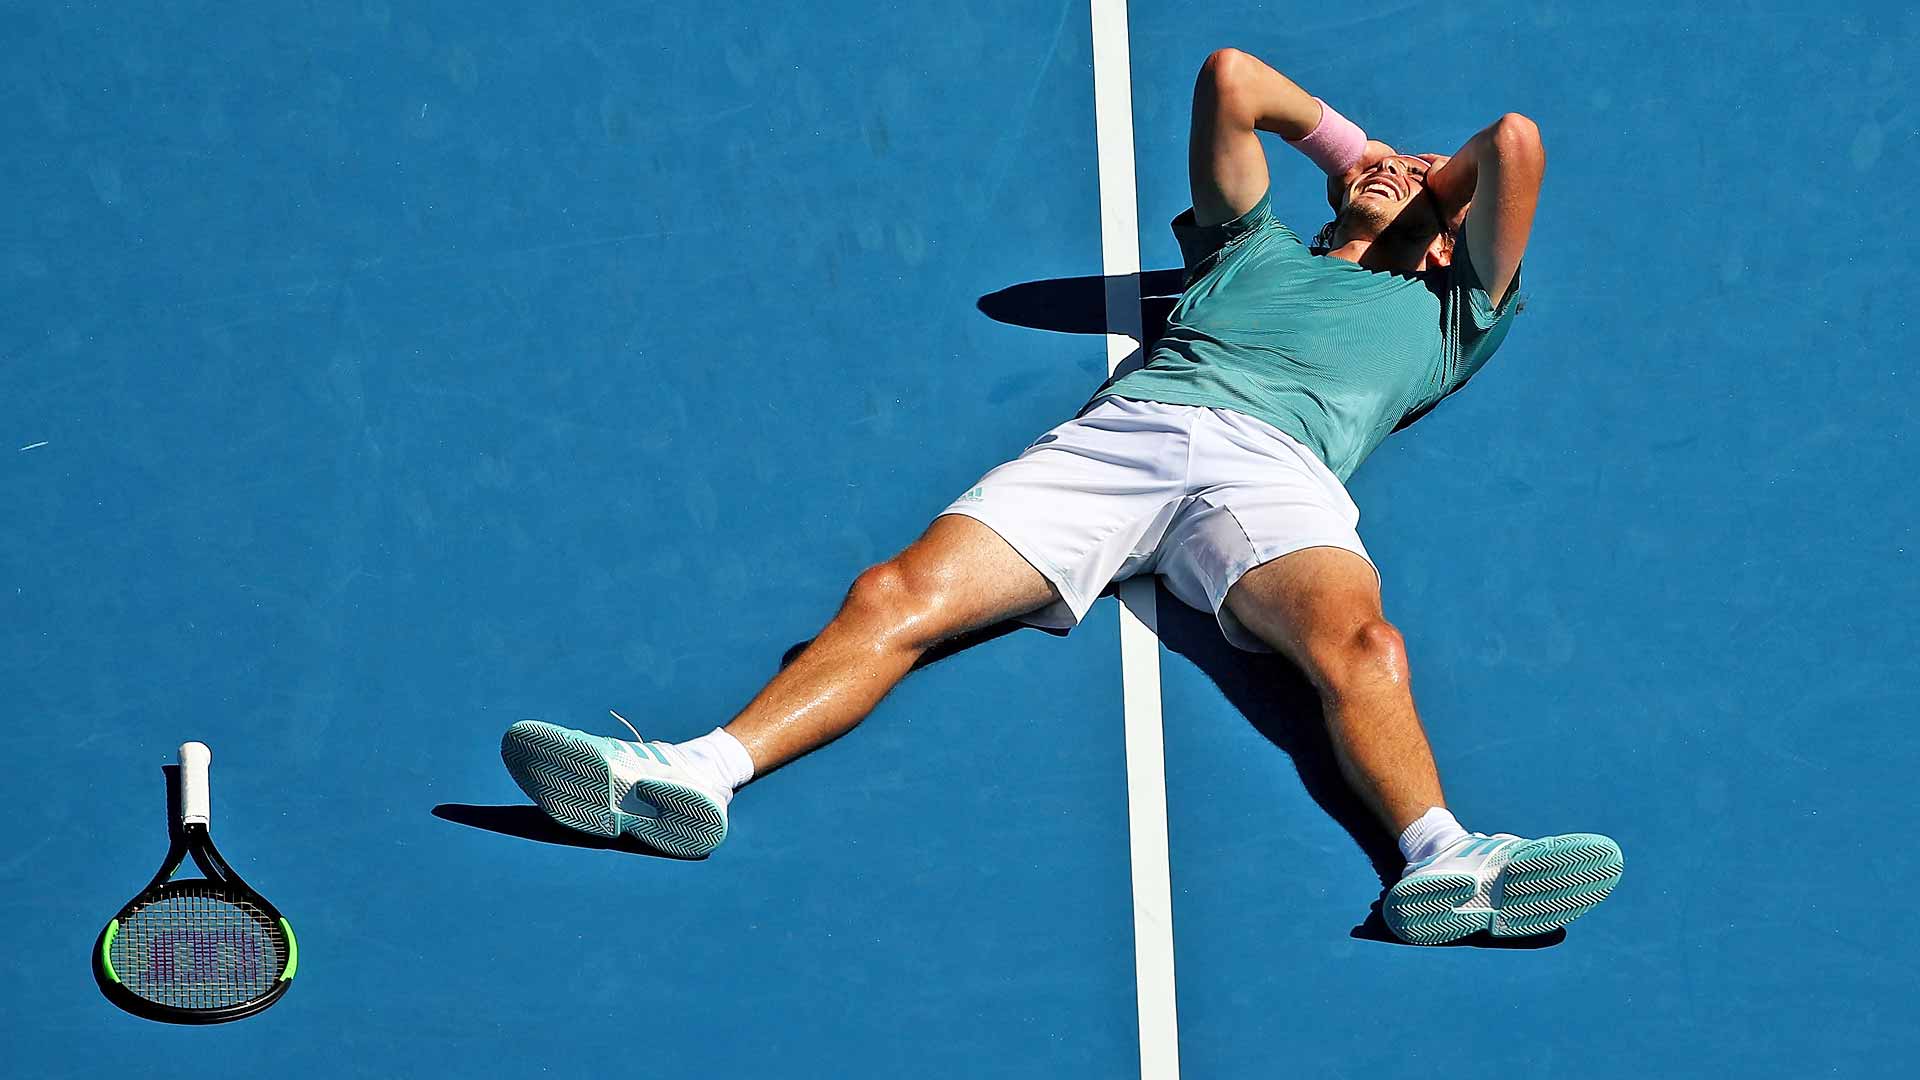 Tsitsipas Outworks Bautista Agut For Major Breakthrough In Melbourne | Next Gen ATP Finals1920 x 1080